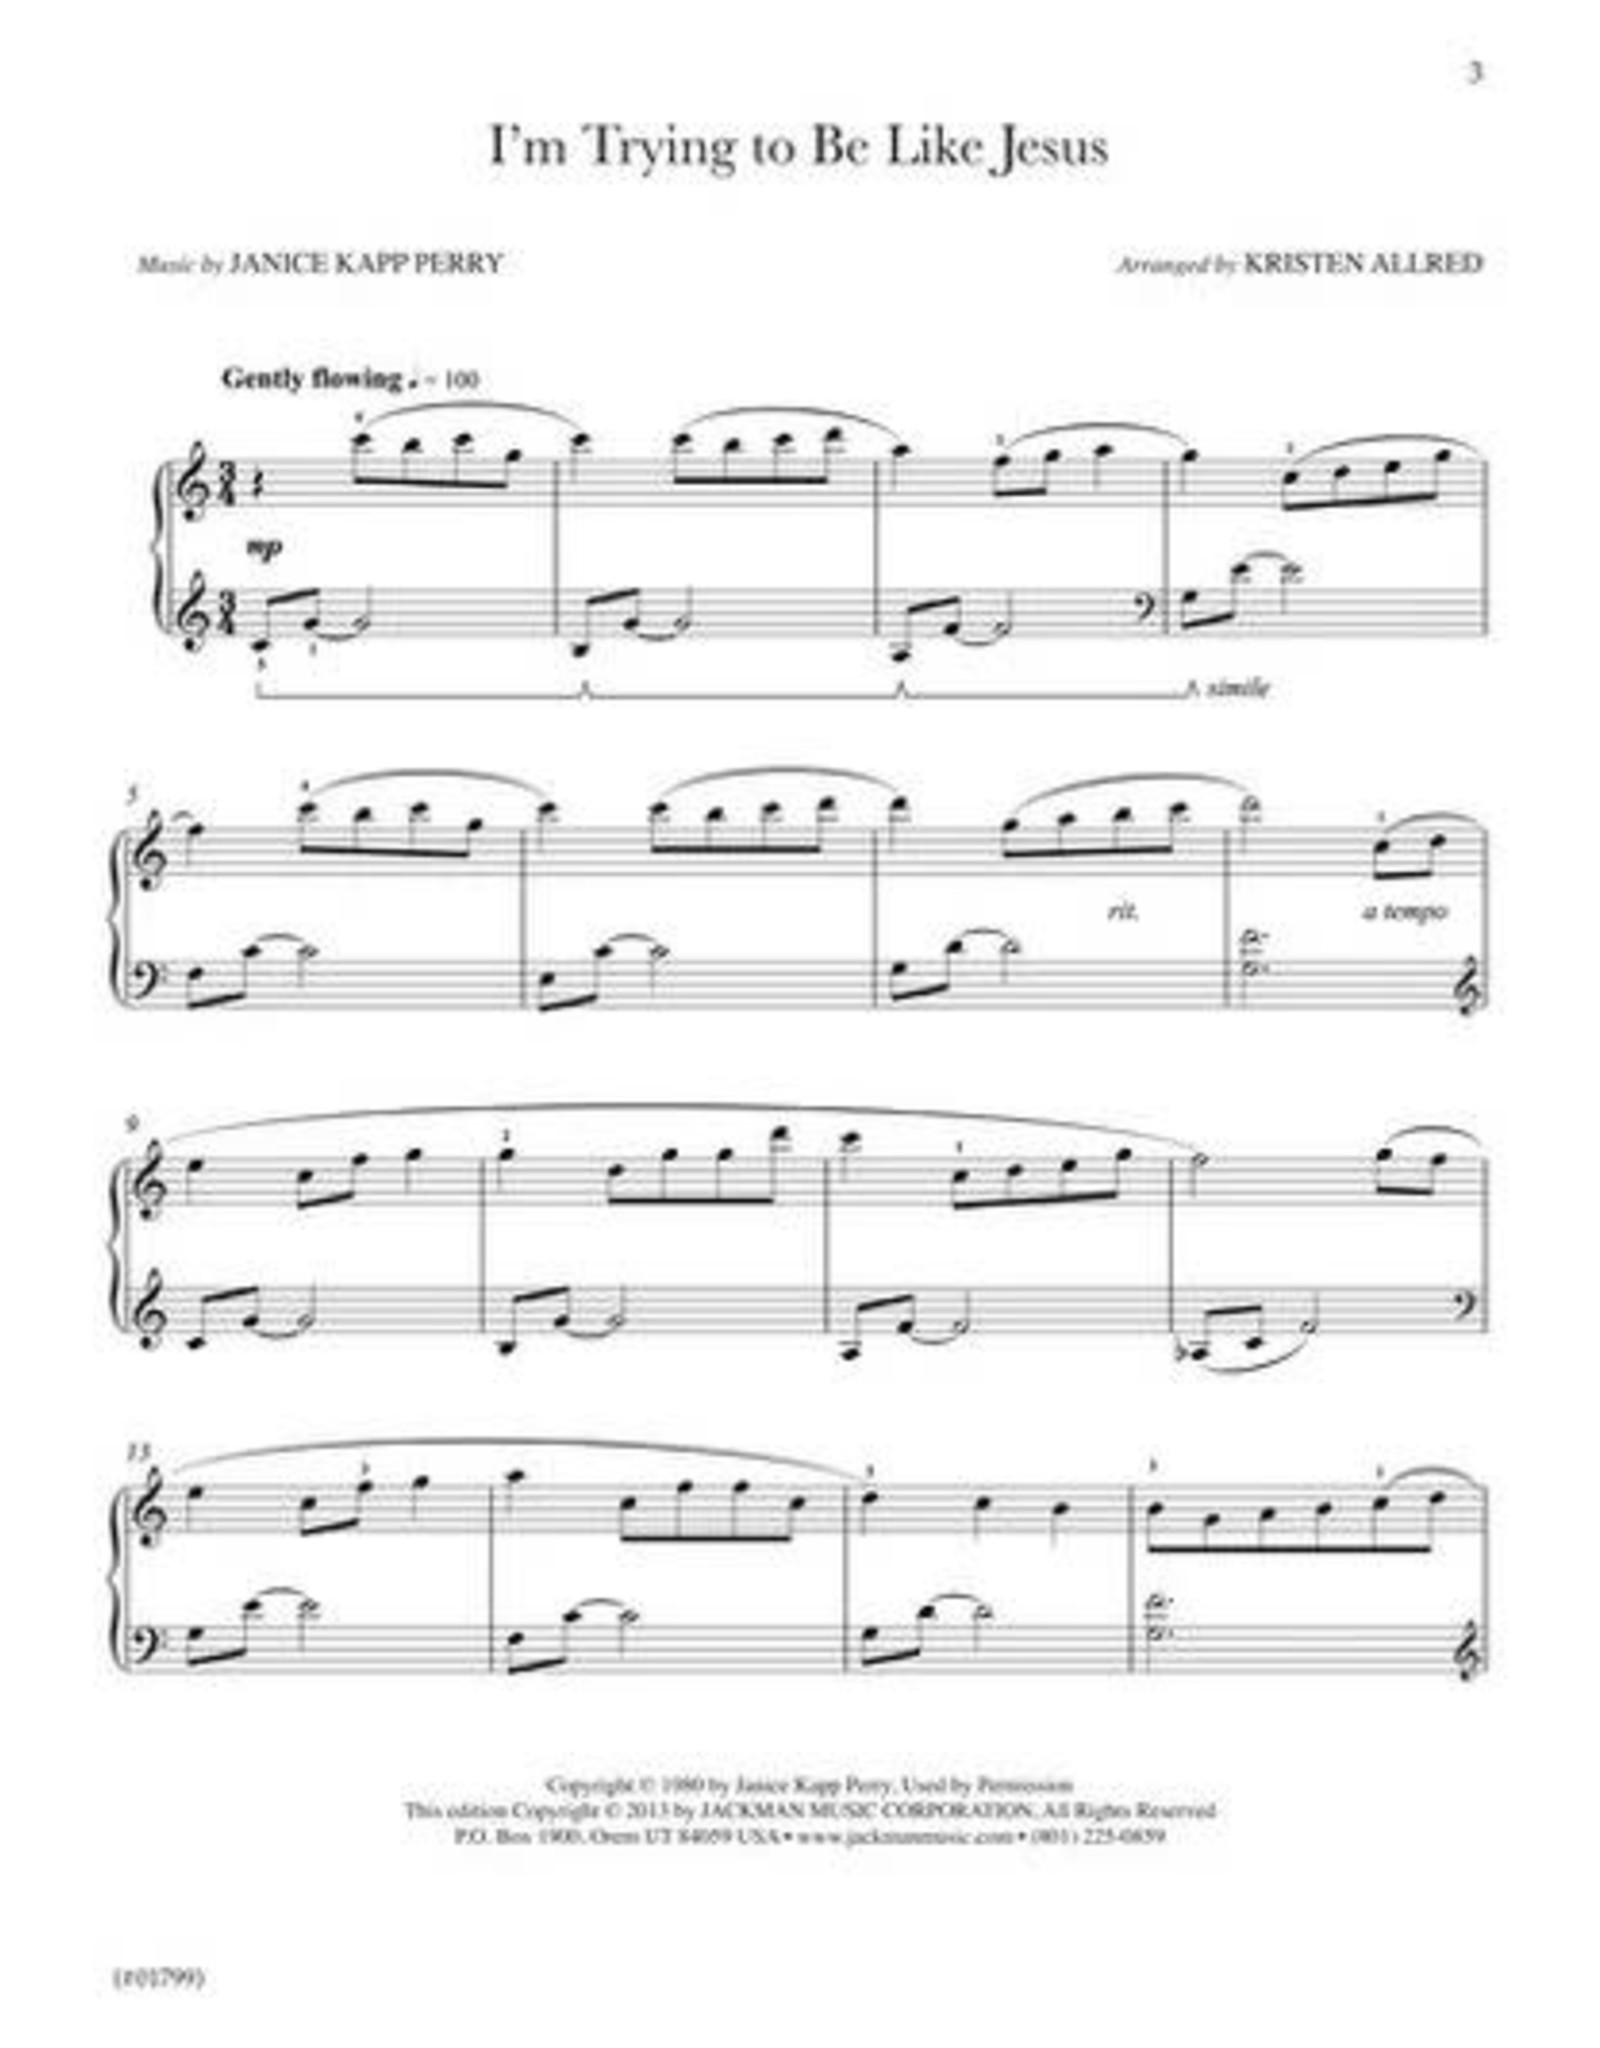 Jackman Music Treasures Vol. 1 - Intermediate LDS Piano Primary Songs arr. Kristen Allred